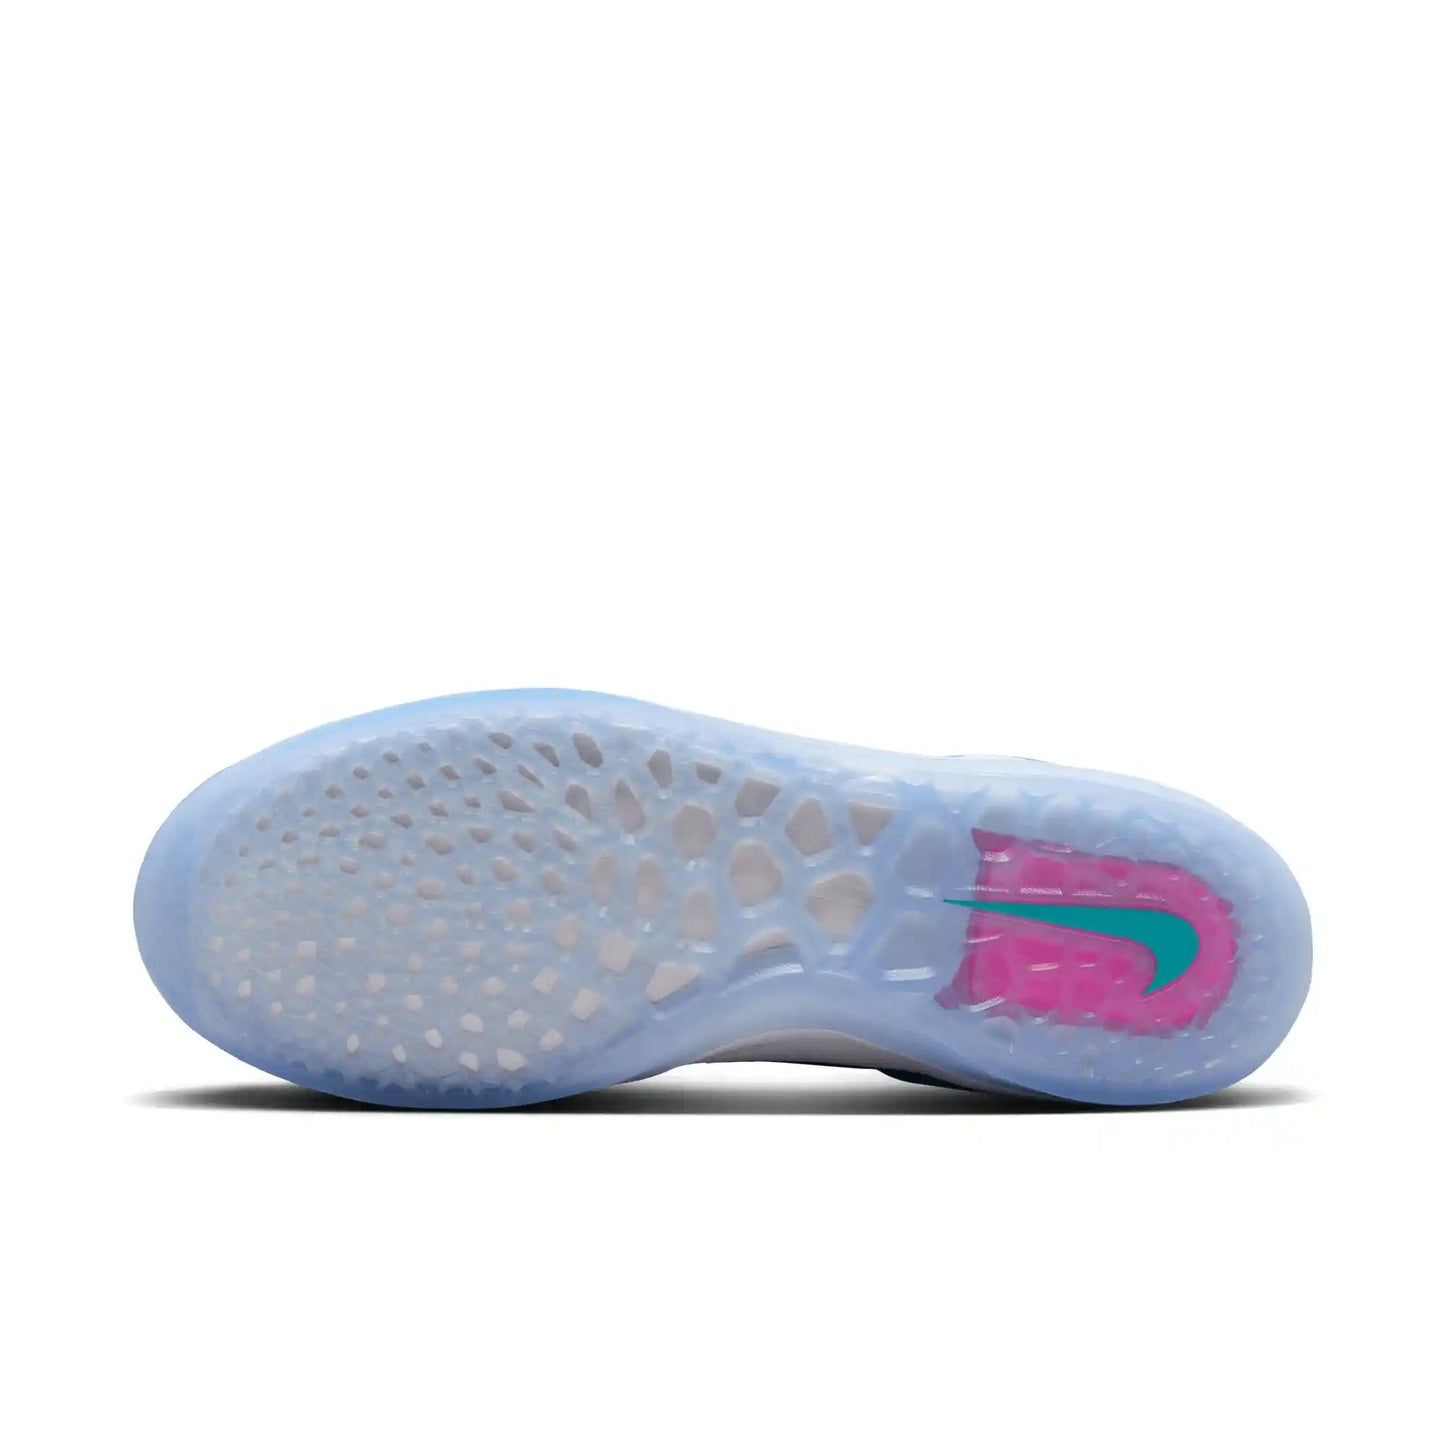 Nike SB Zoom Nyjah 3, dusty cactus/pinksicle - Tiki Room Skateboards - 10